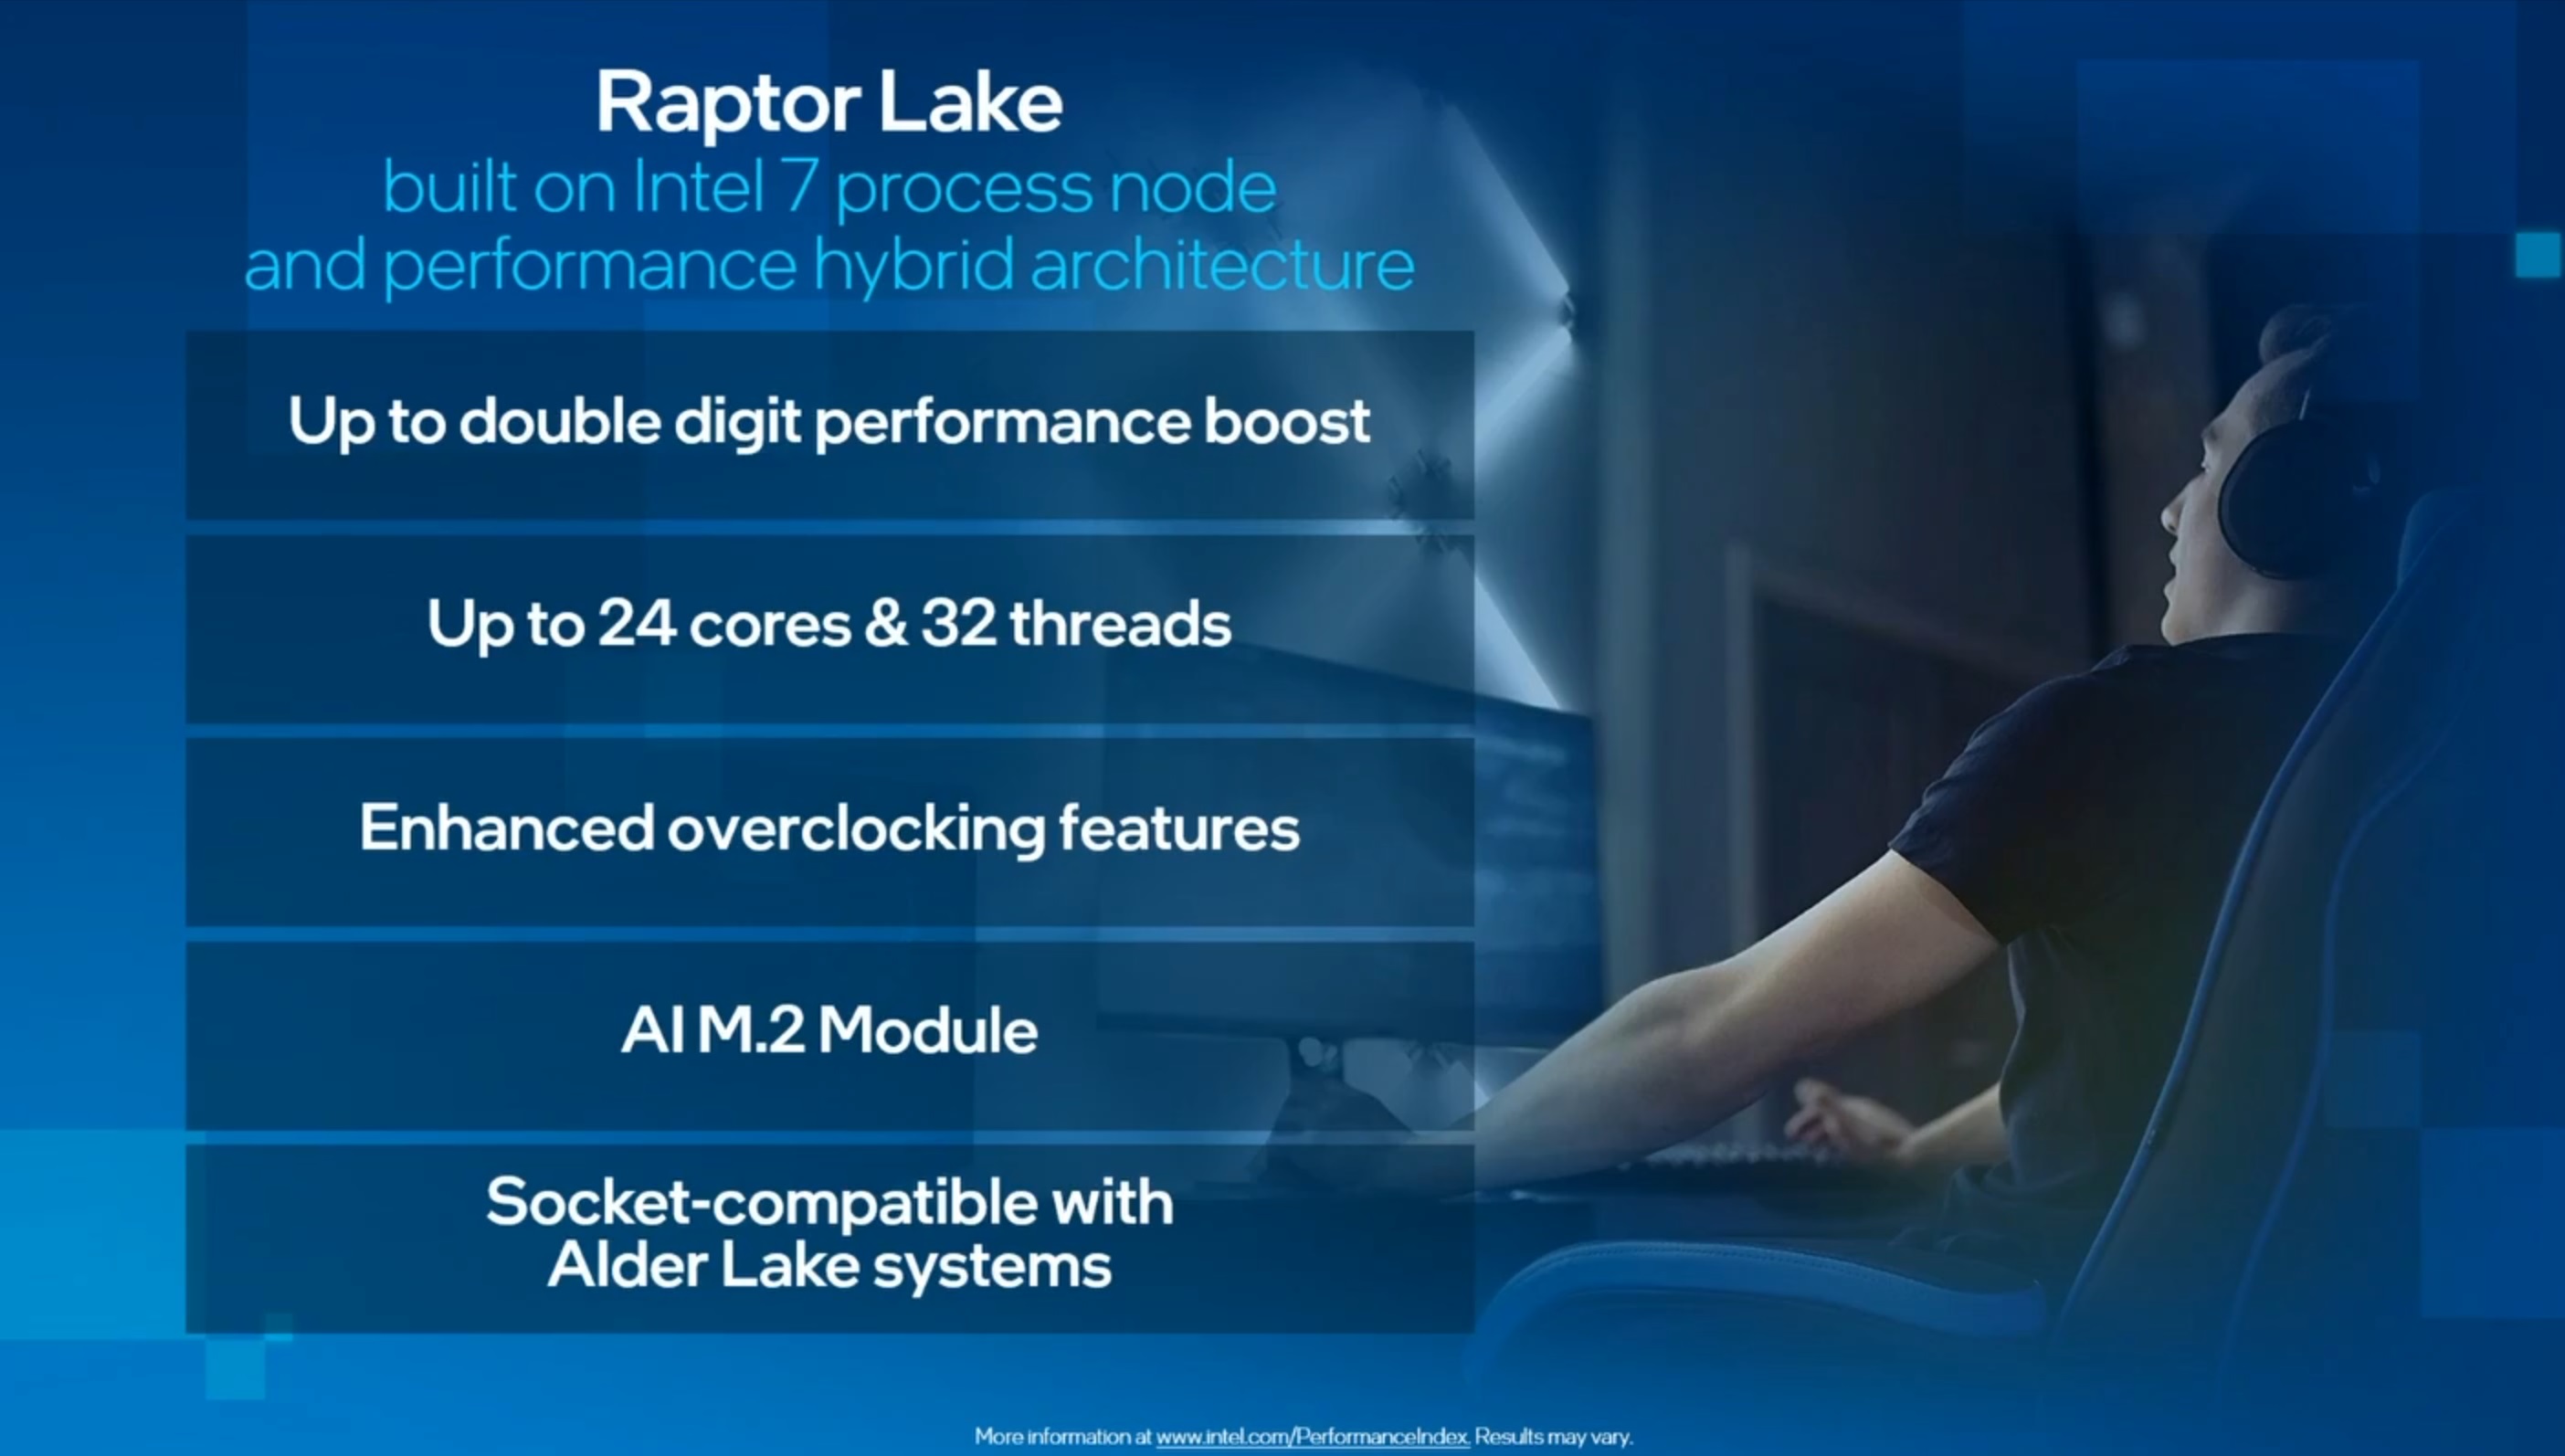 Diapositiva de presentación de Intel Raptor Lake.